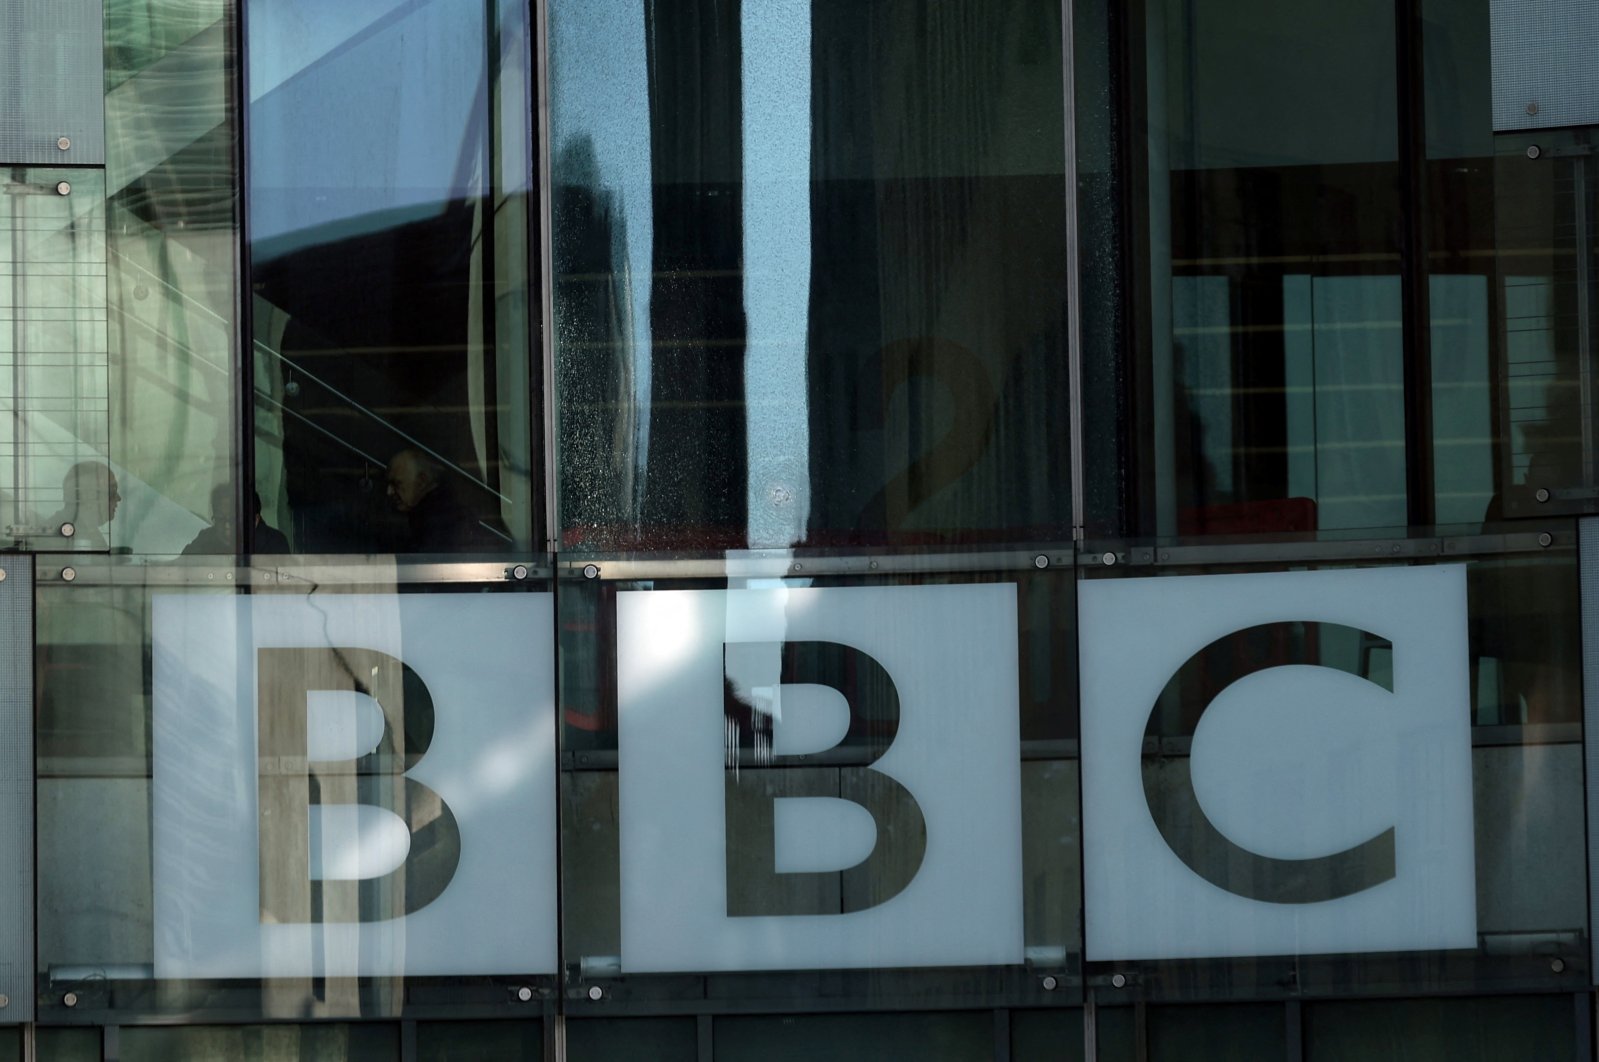 BBC komersial akan mengecewakan penonton Inggris: kepala BBC